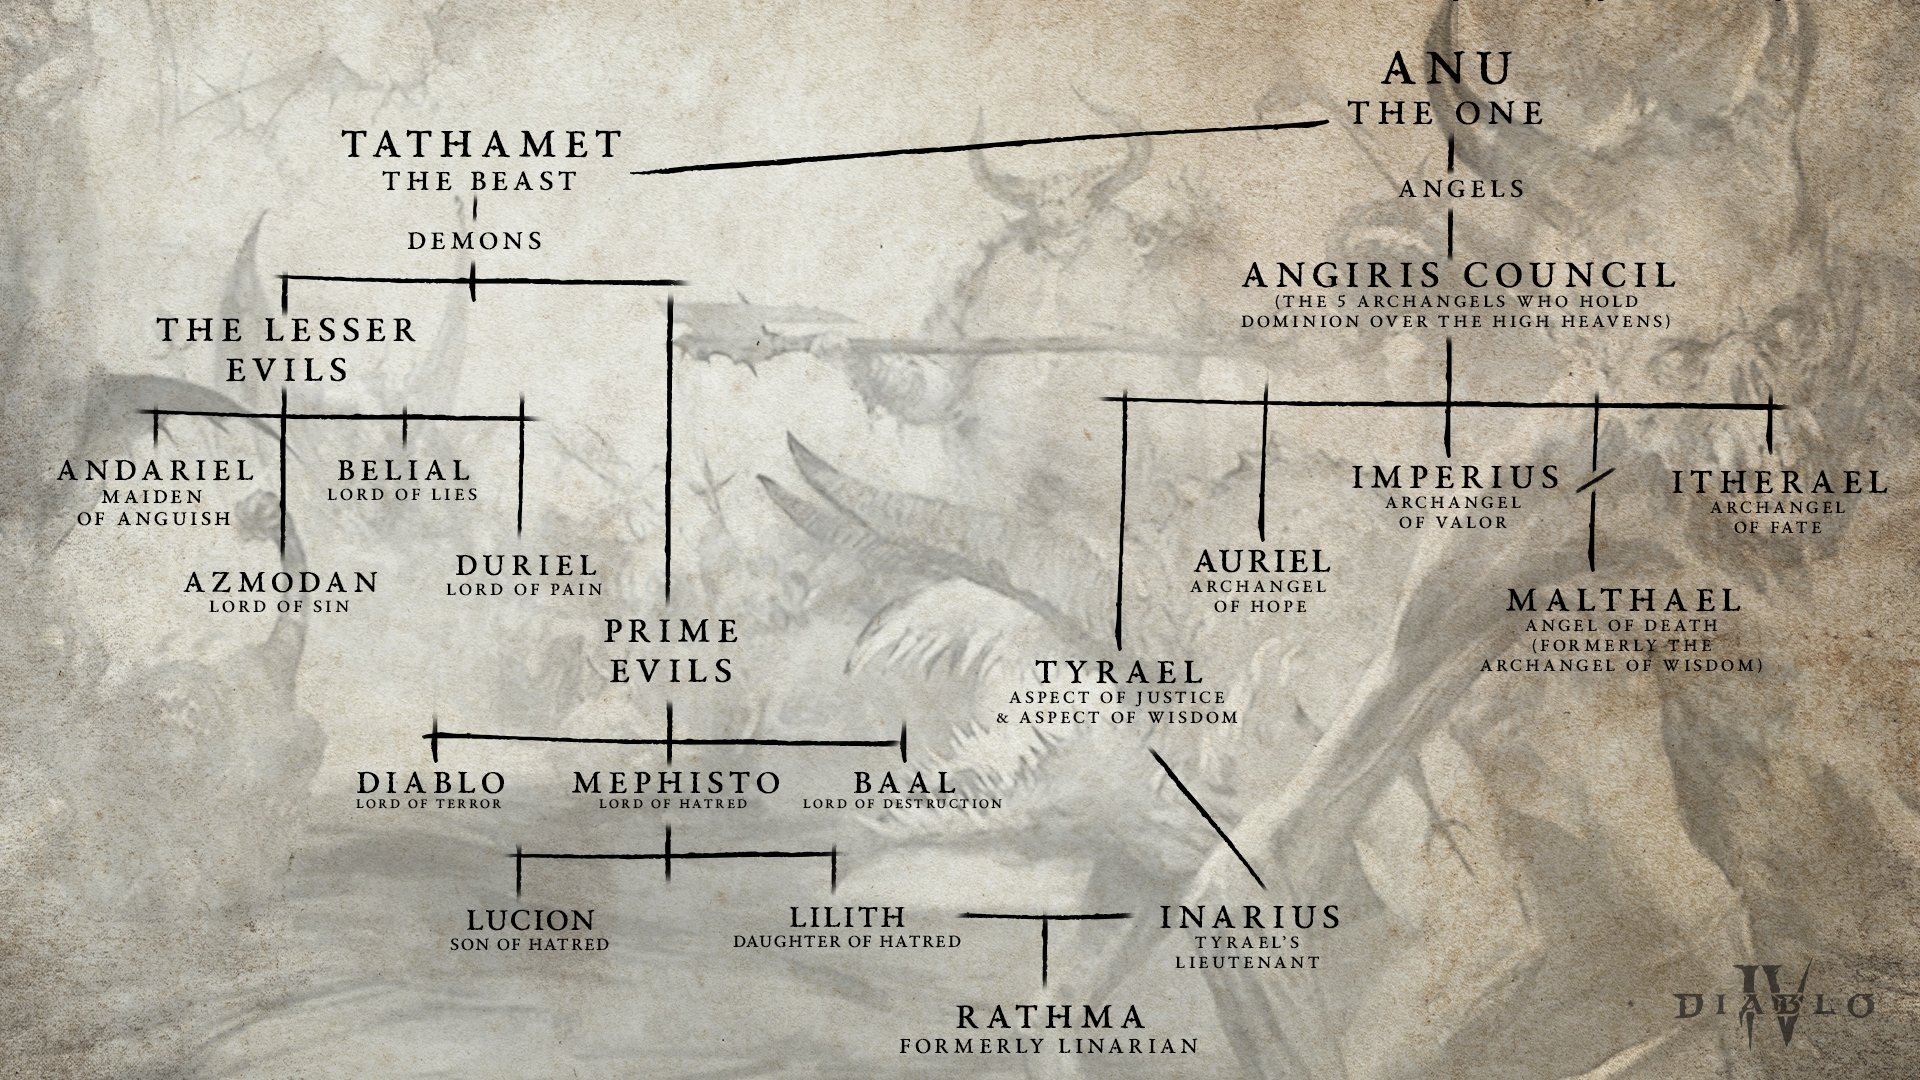 Diablo 4 Demons and Angels Relationships Image